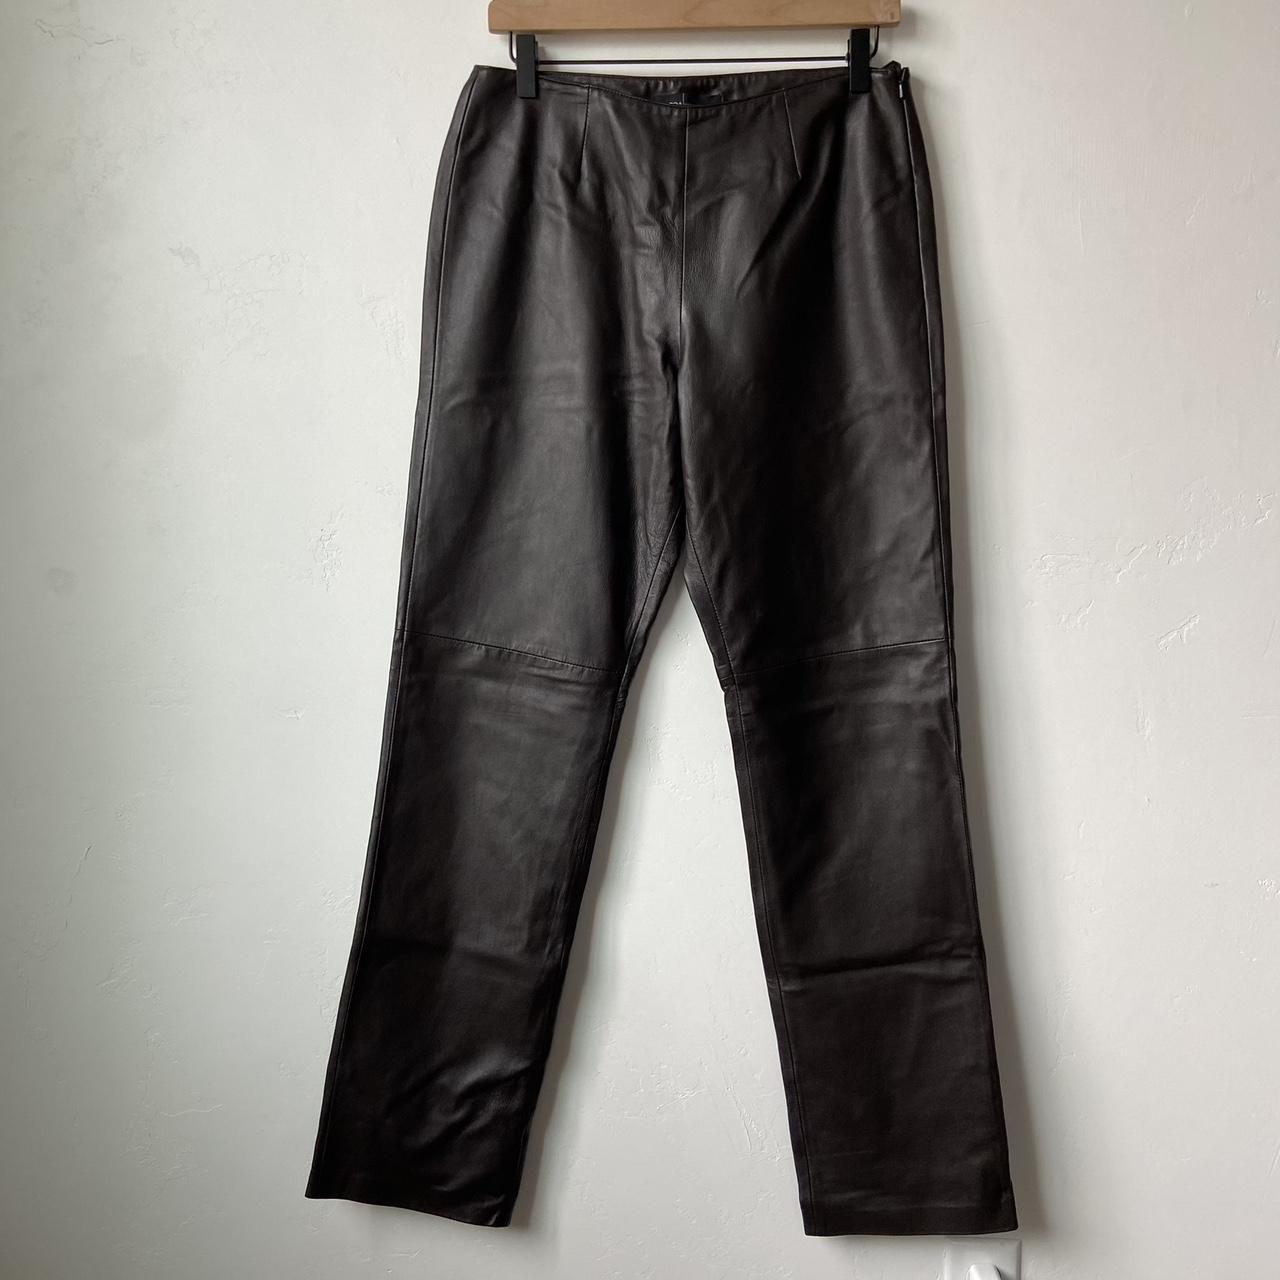 Vintage Y2K Dark Brown Leather Business Pants Size... - Depop